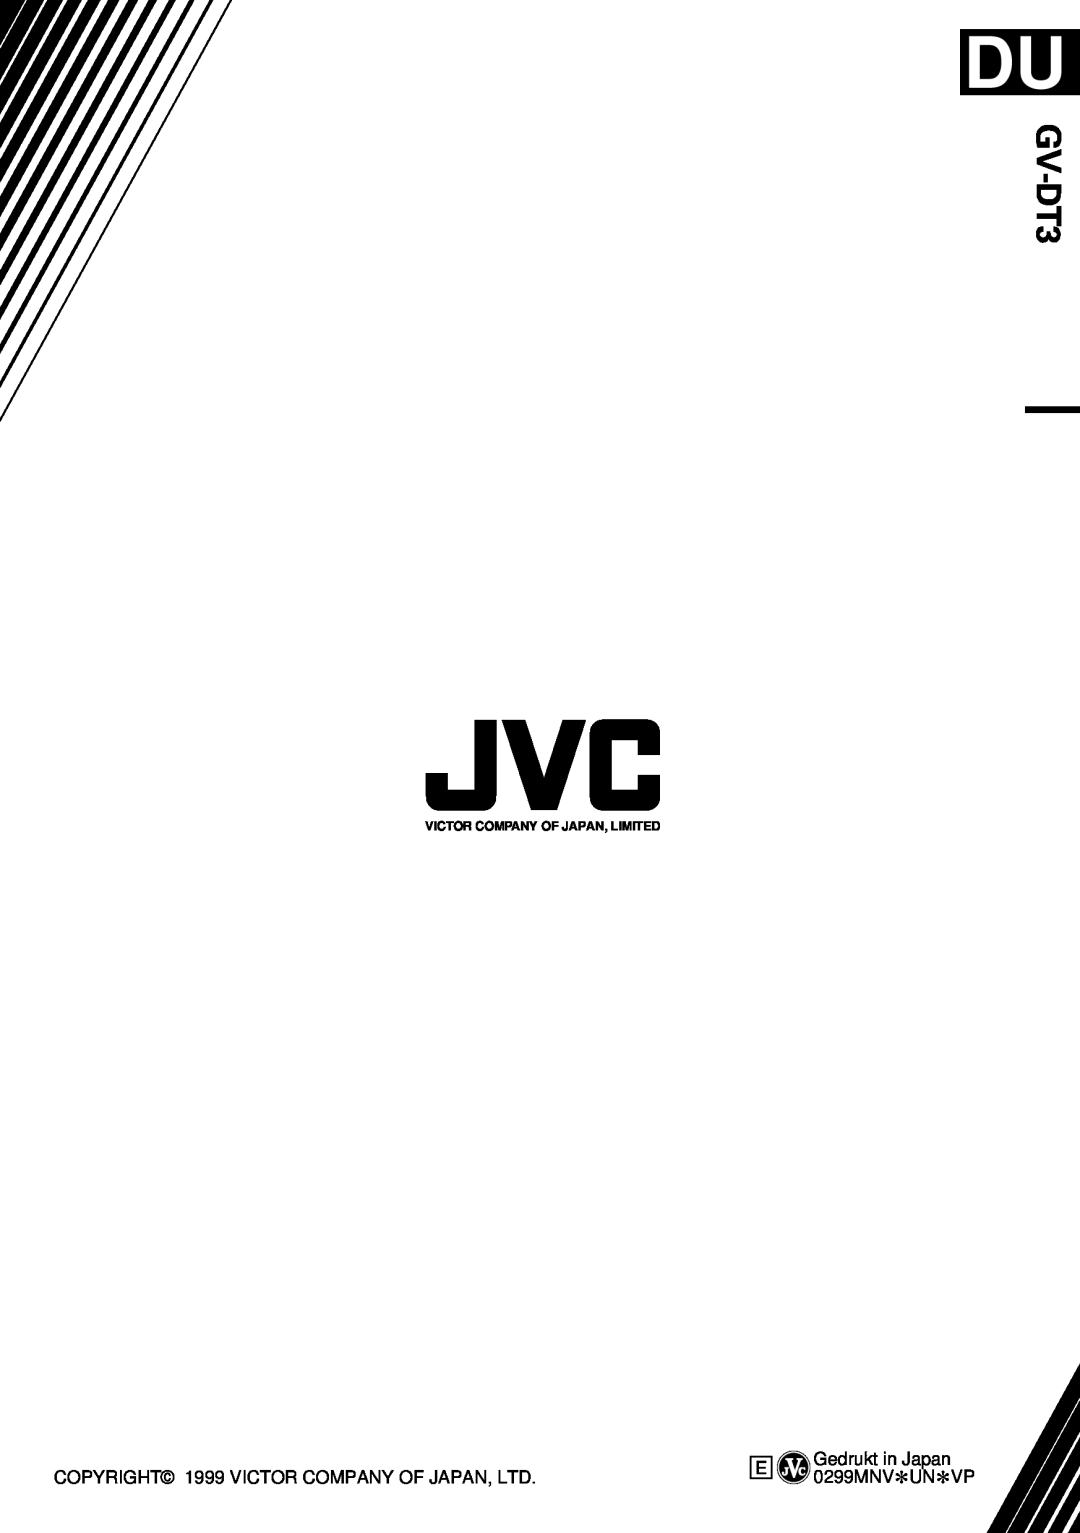 JVC GV-DT3 manual Gedrukt in Japan 0299MNV*UN*VP, Victor Company Of Japan, Limited 